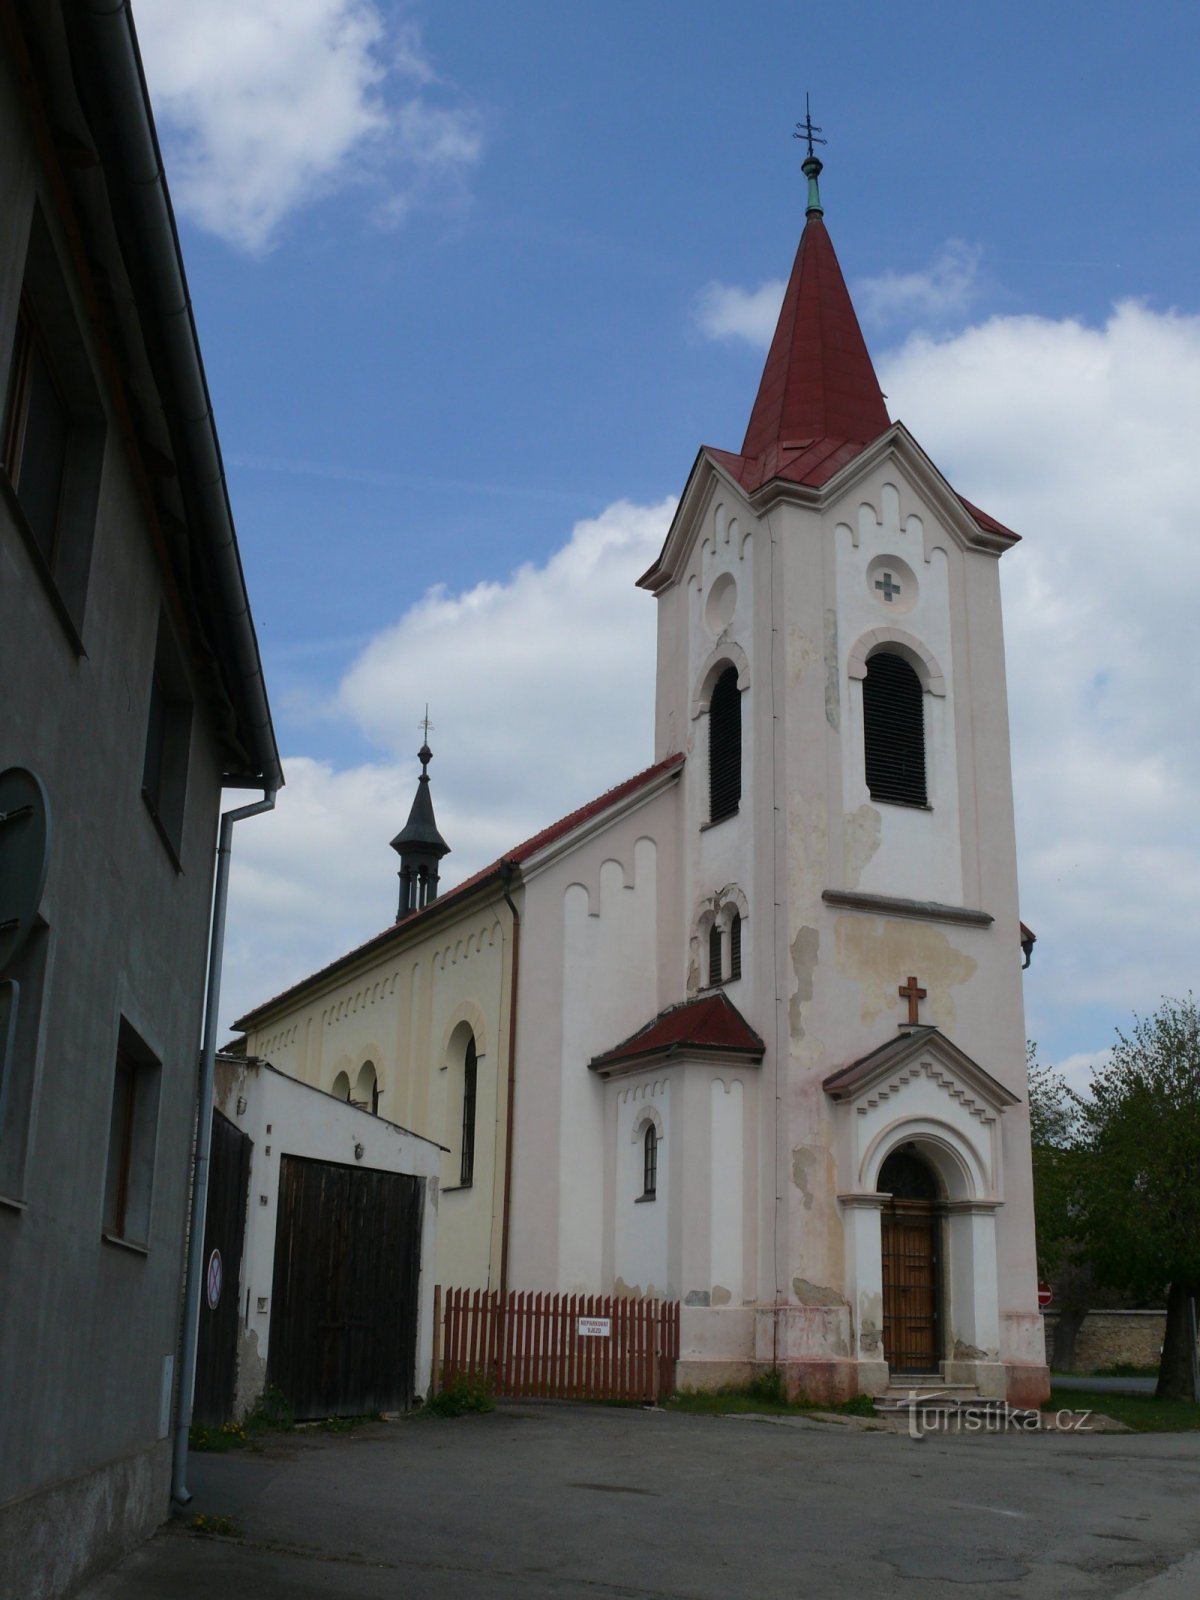 Church of St. Martin in Třebotov